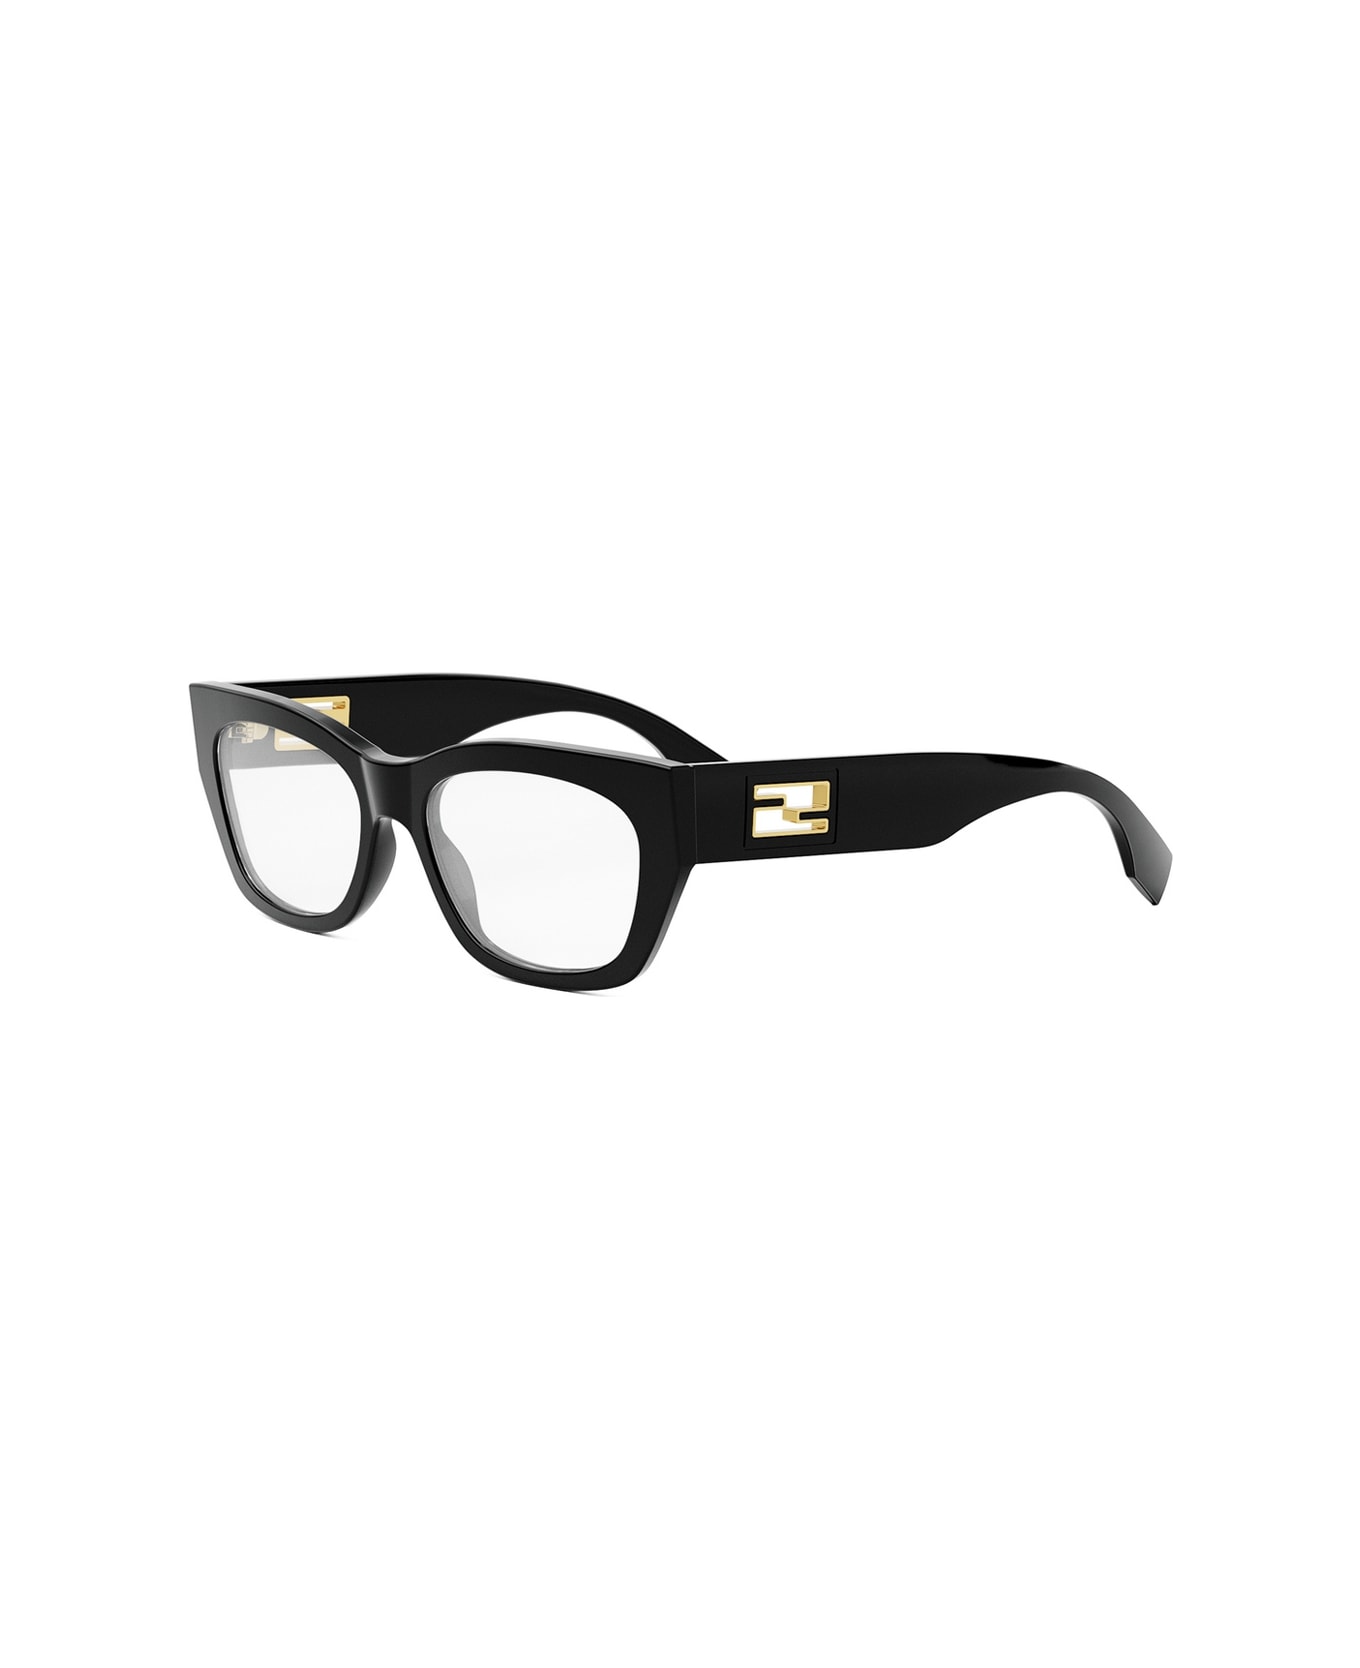 Fendi Eyewear Fe50082i 001 Glasses - Nero